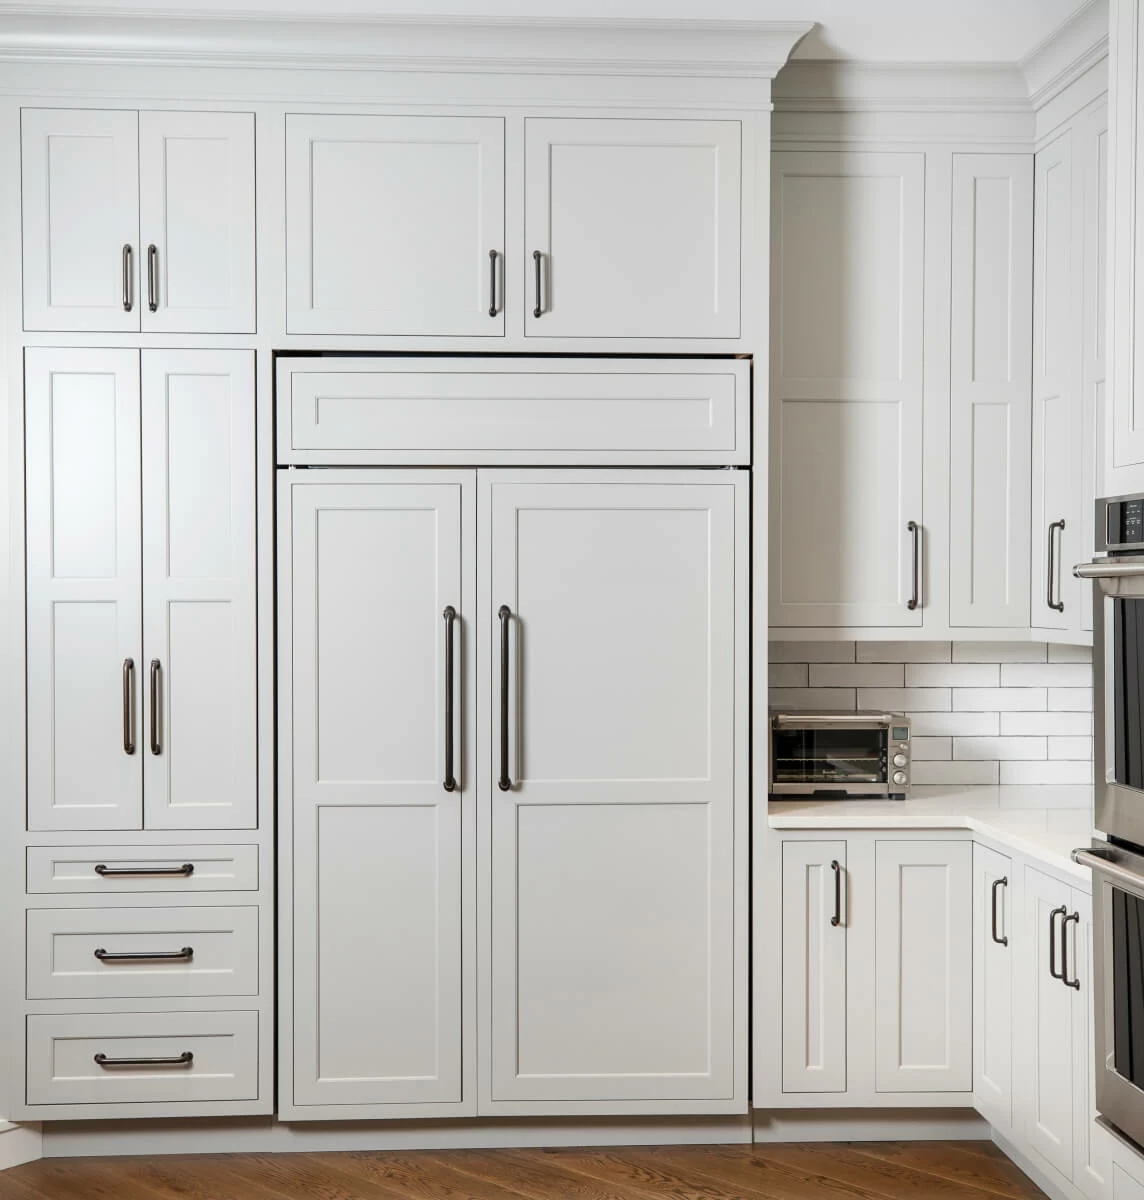 Appliance Panels, Refrigerator Cabinet Panels Installation